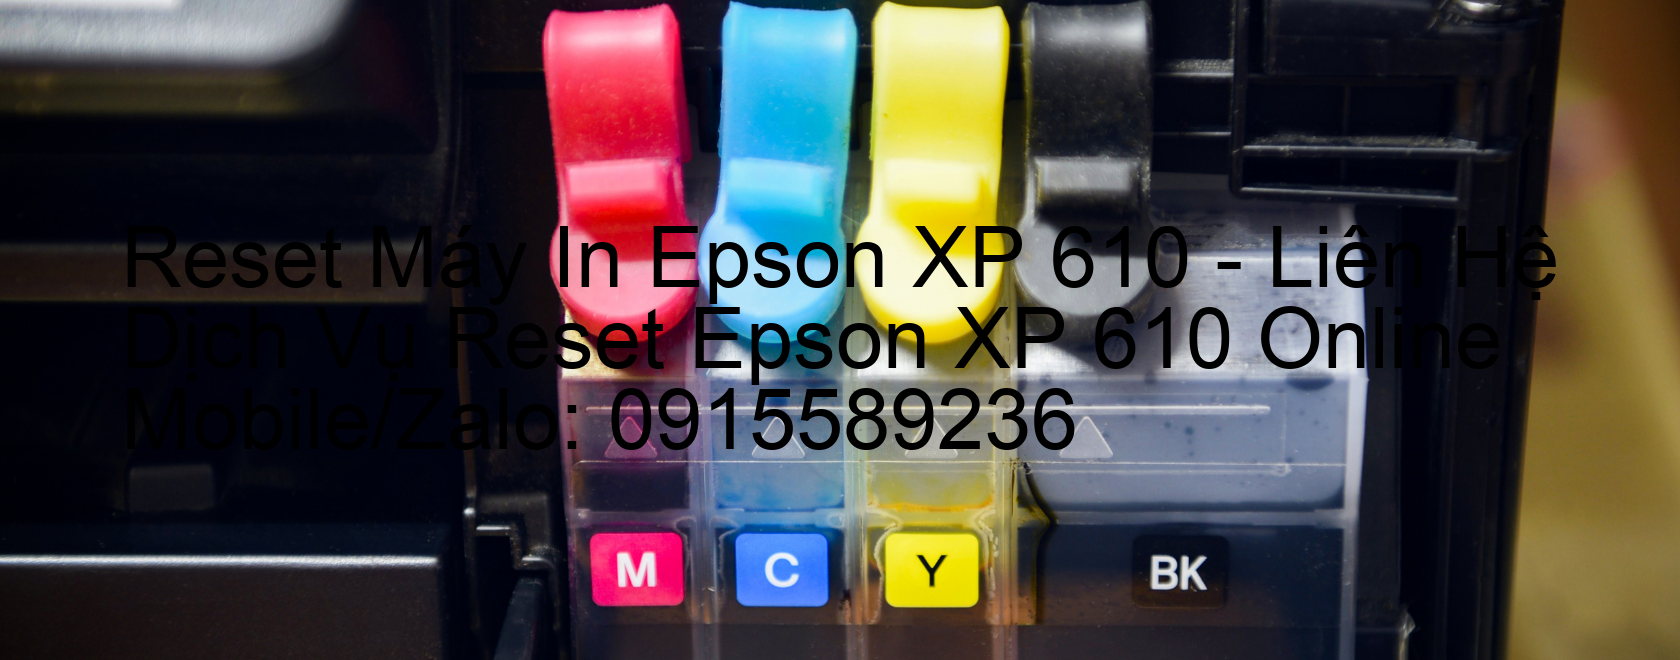 Reset Máy In Epson XP 610 Online